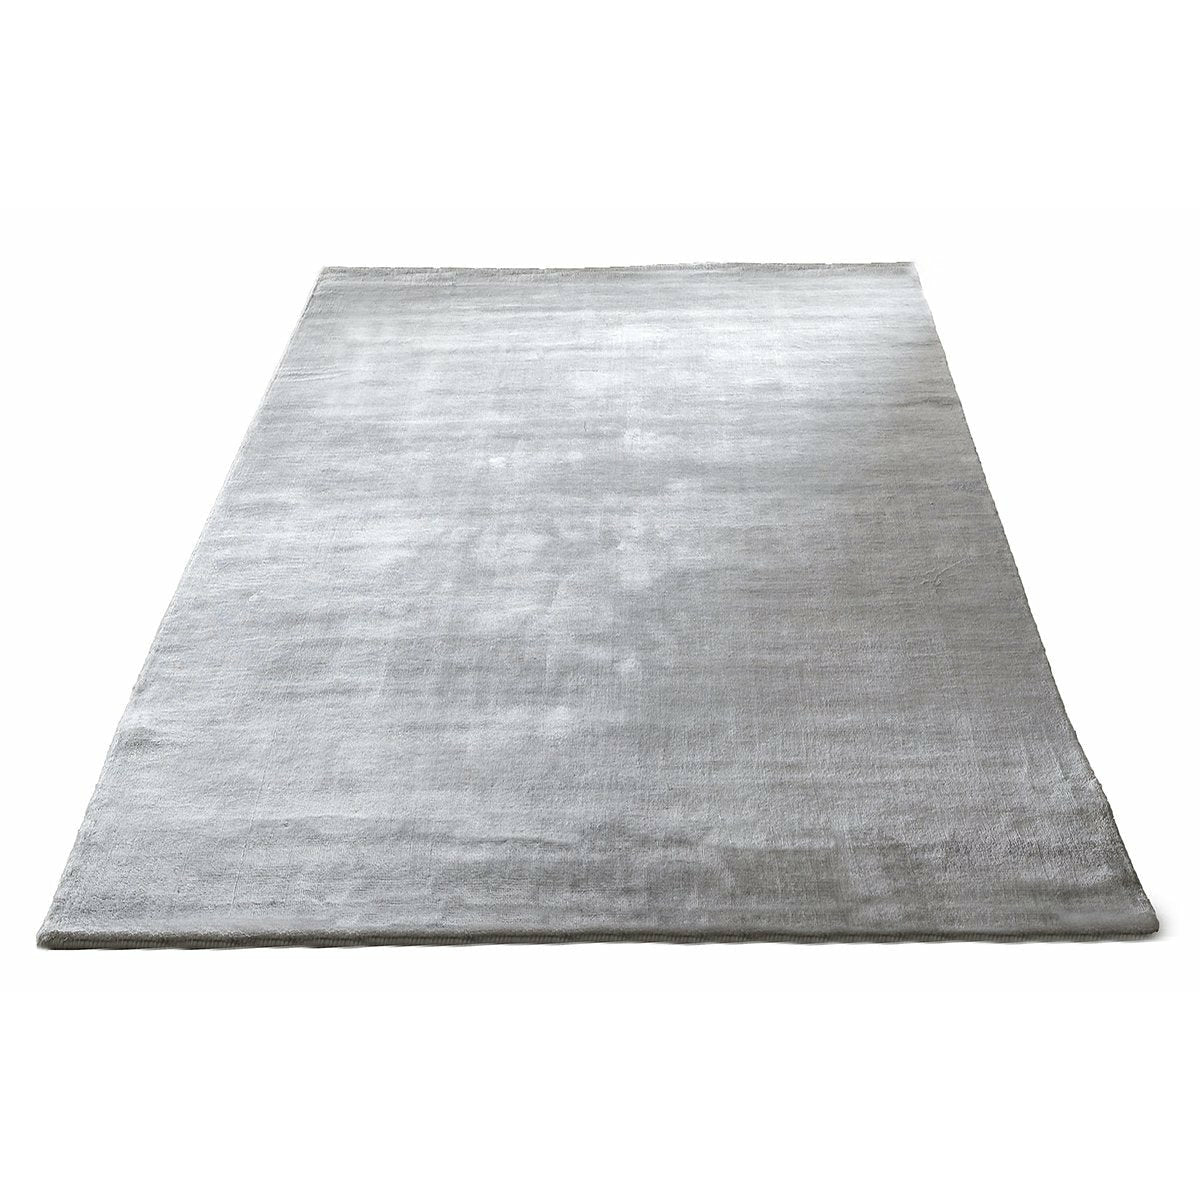 Massimo Bambu -matta ljusgrå, 250x300 cm